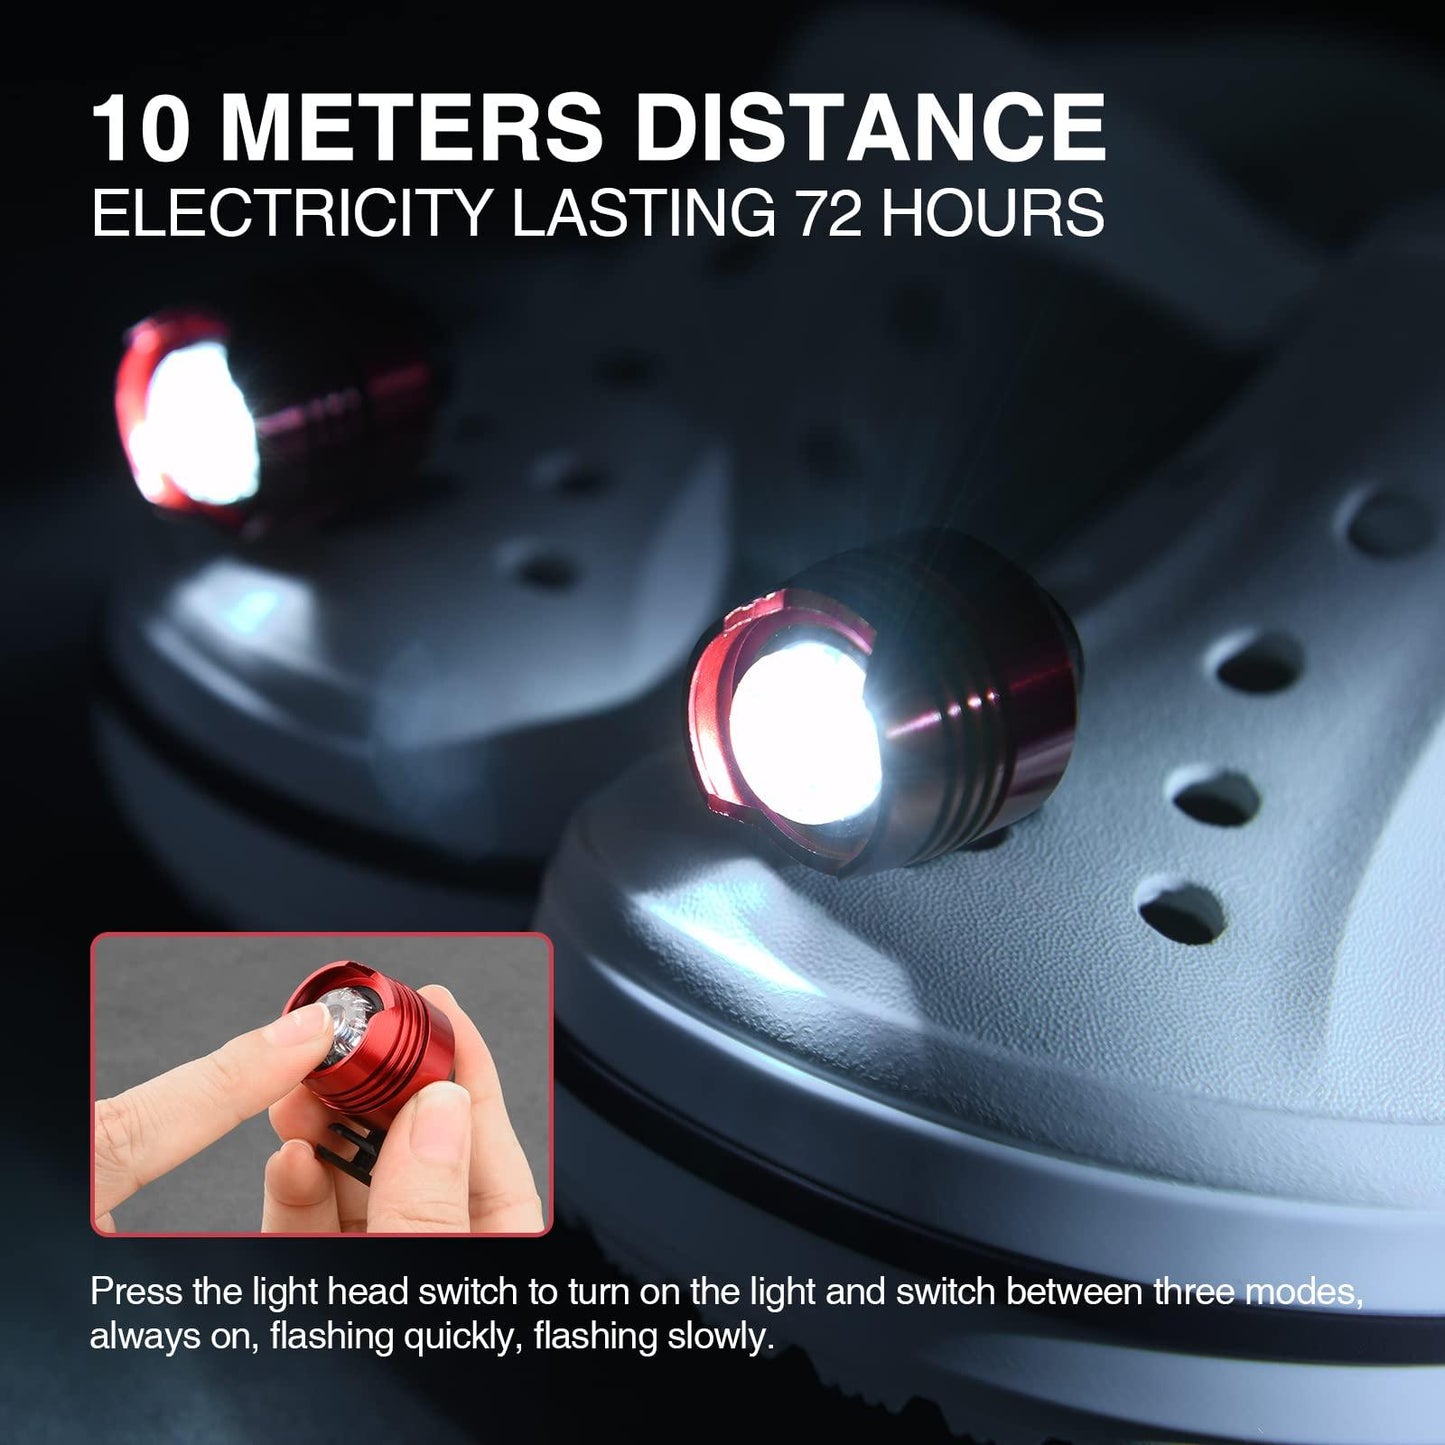 Crocs LED Headlights - Lasts up to 72 Hours on a Single Charge